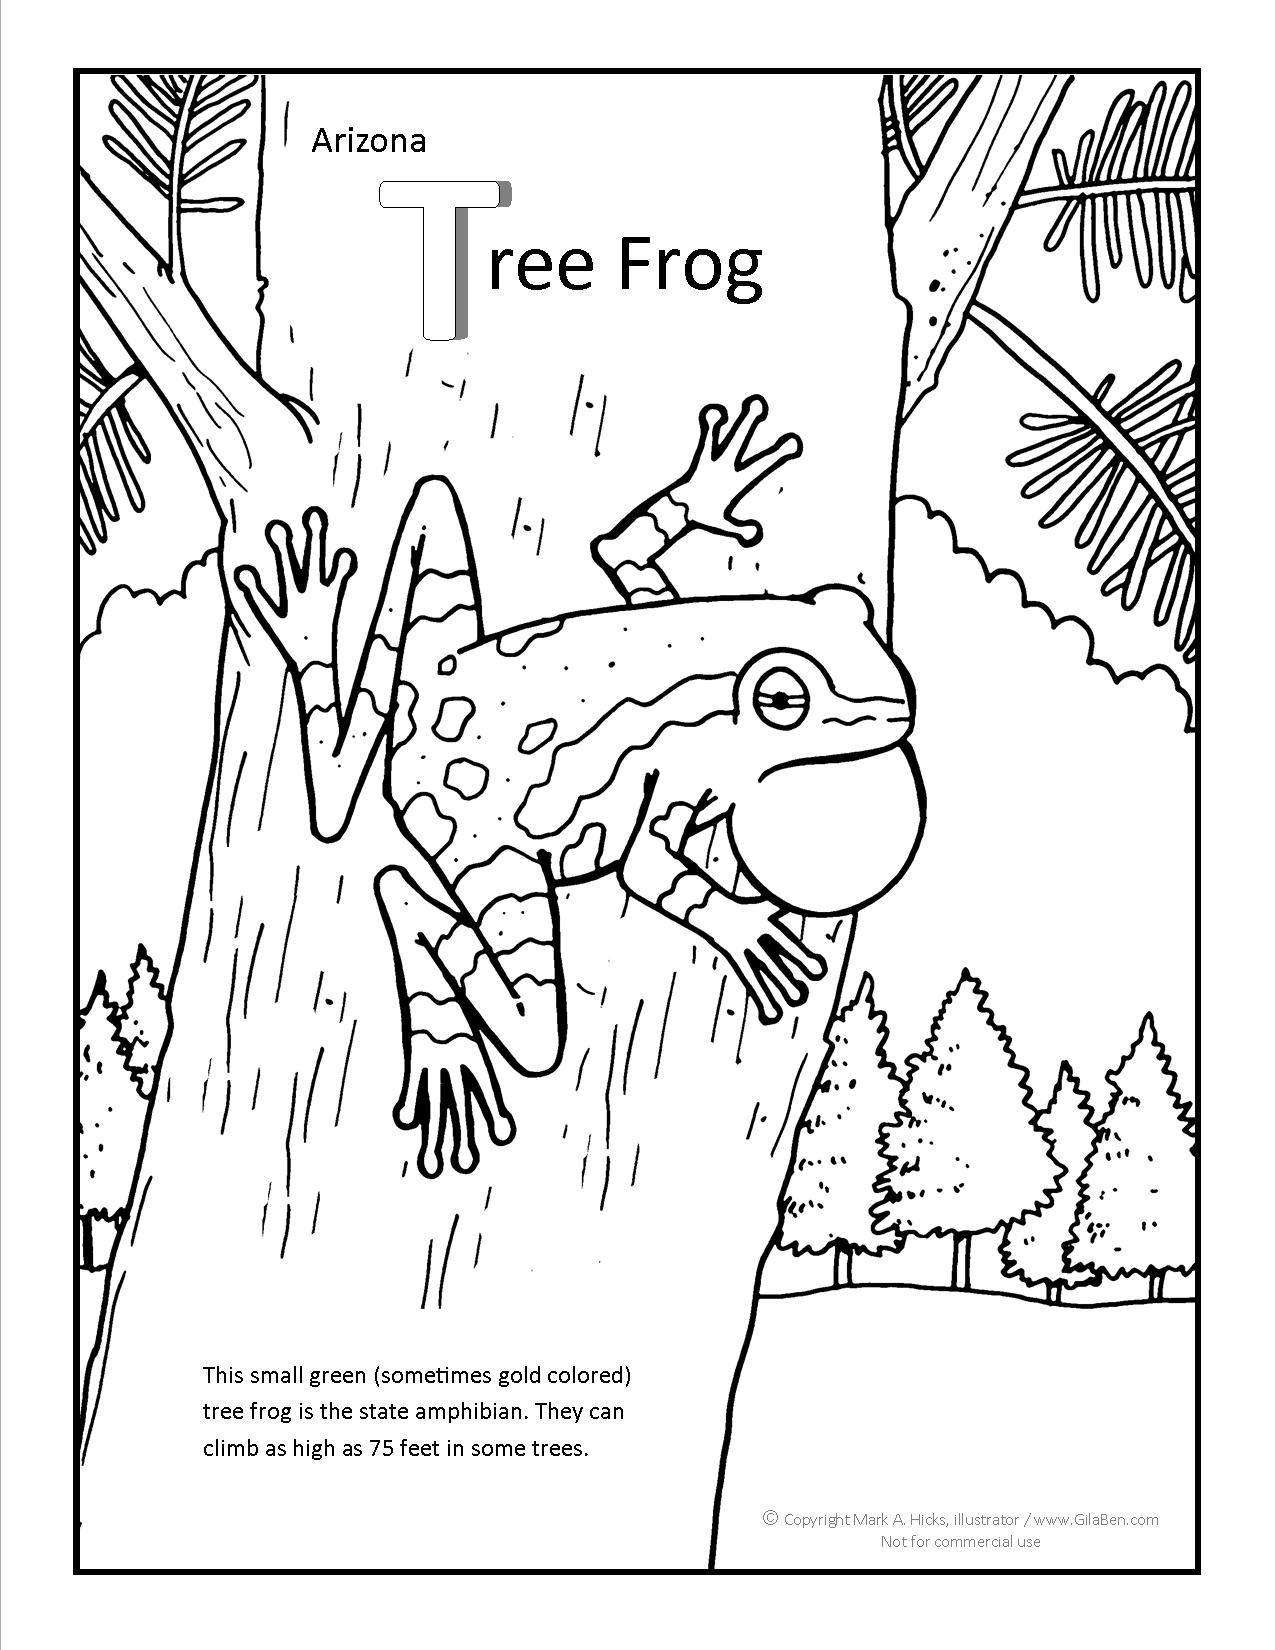 Arizona Tree Frog Coloring Page